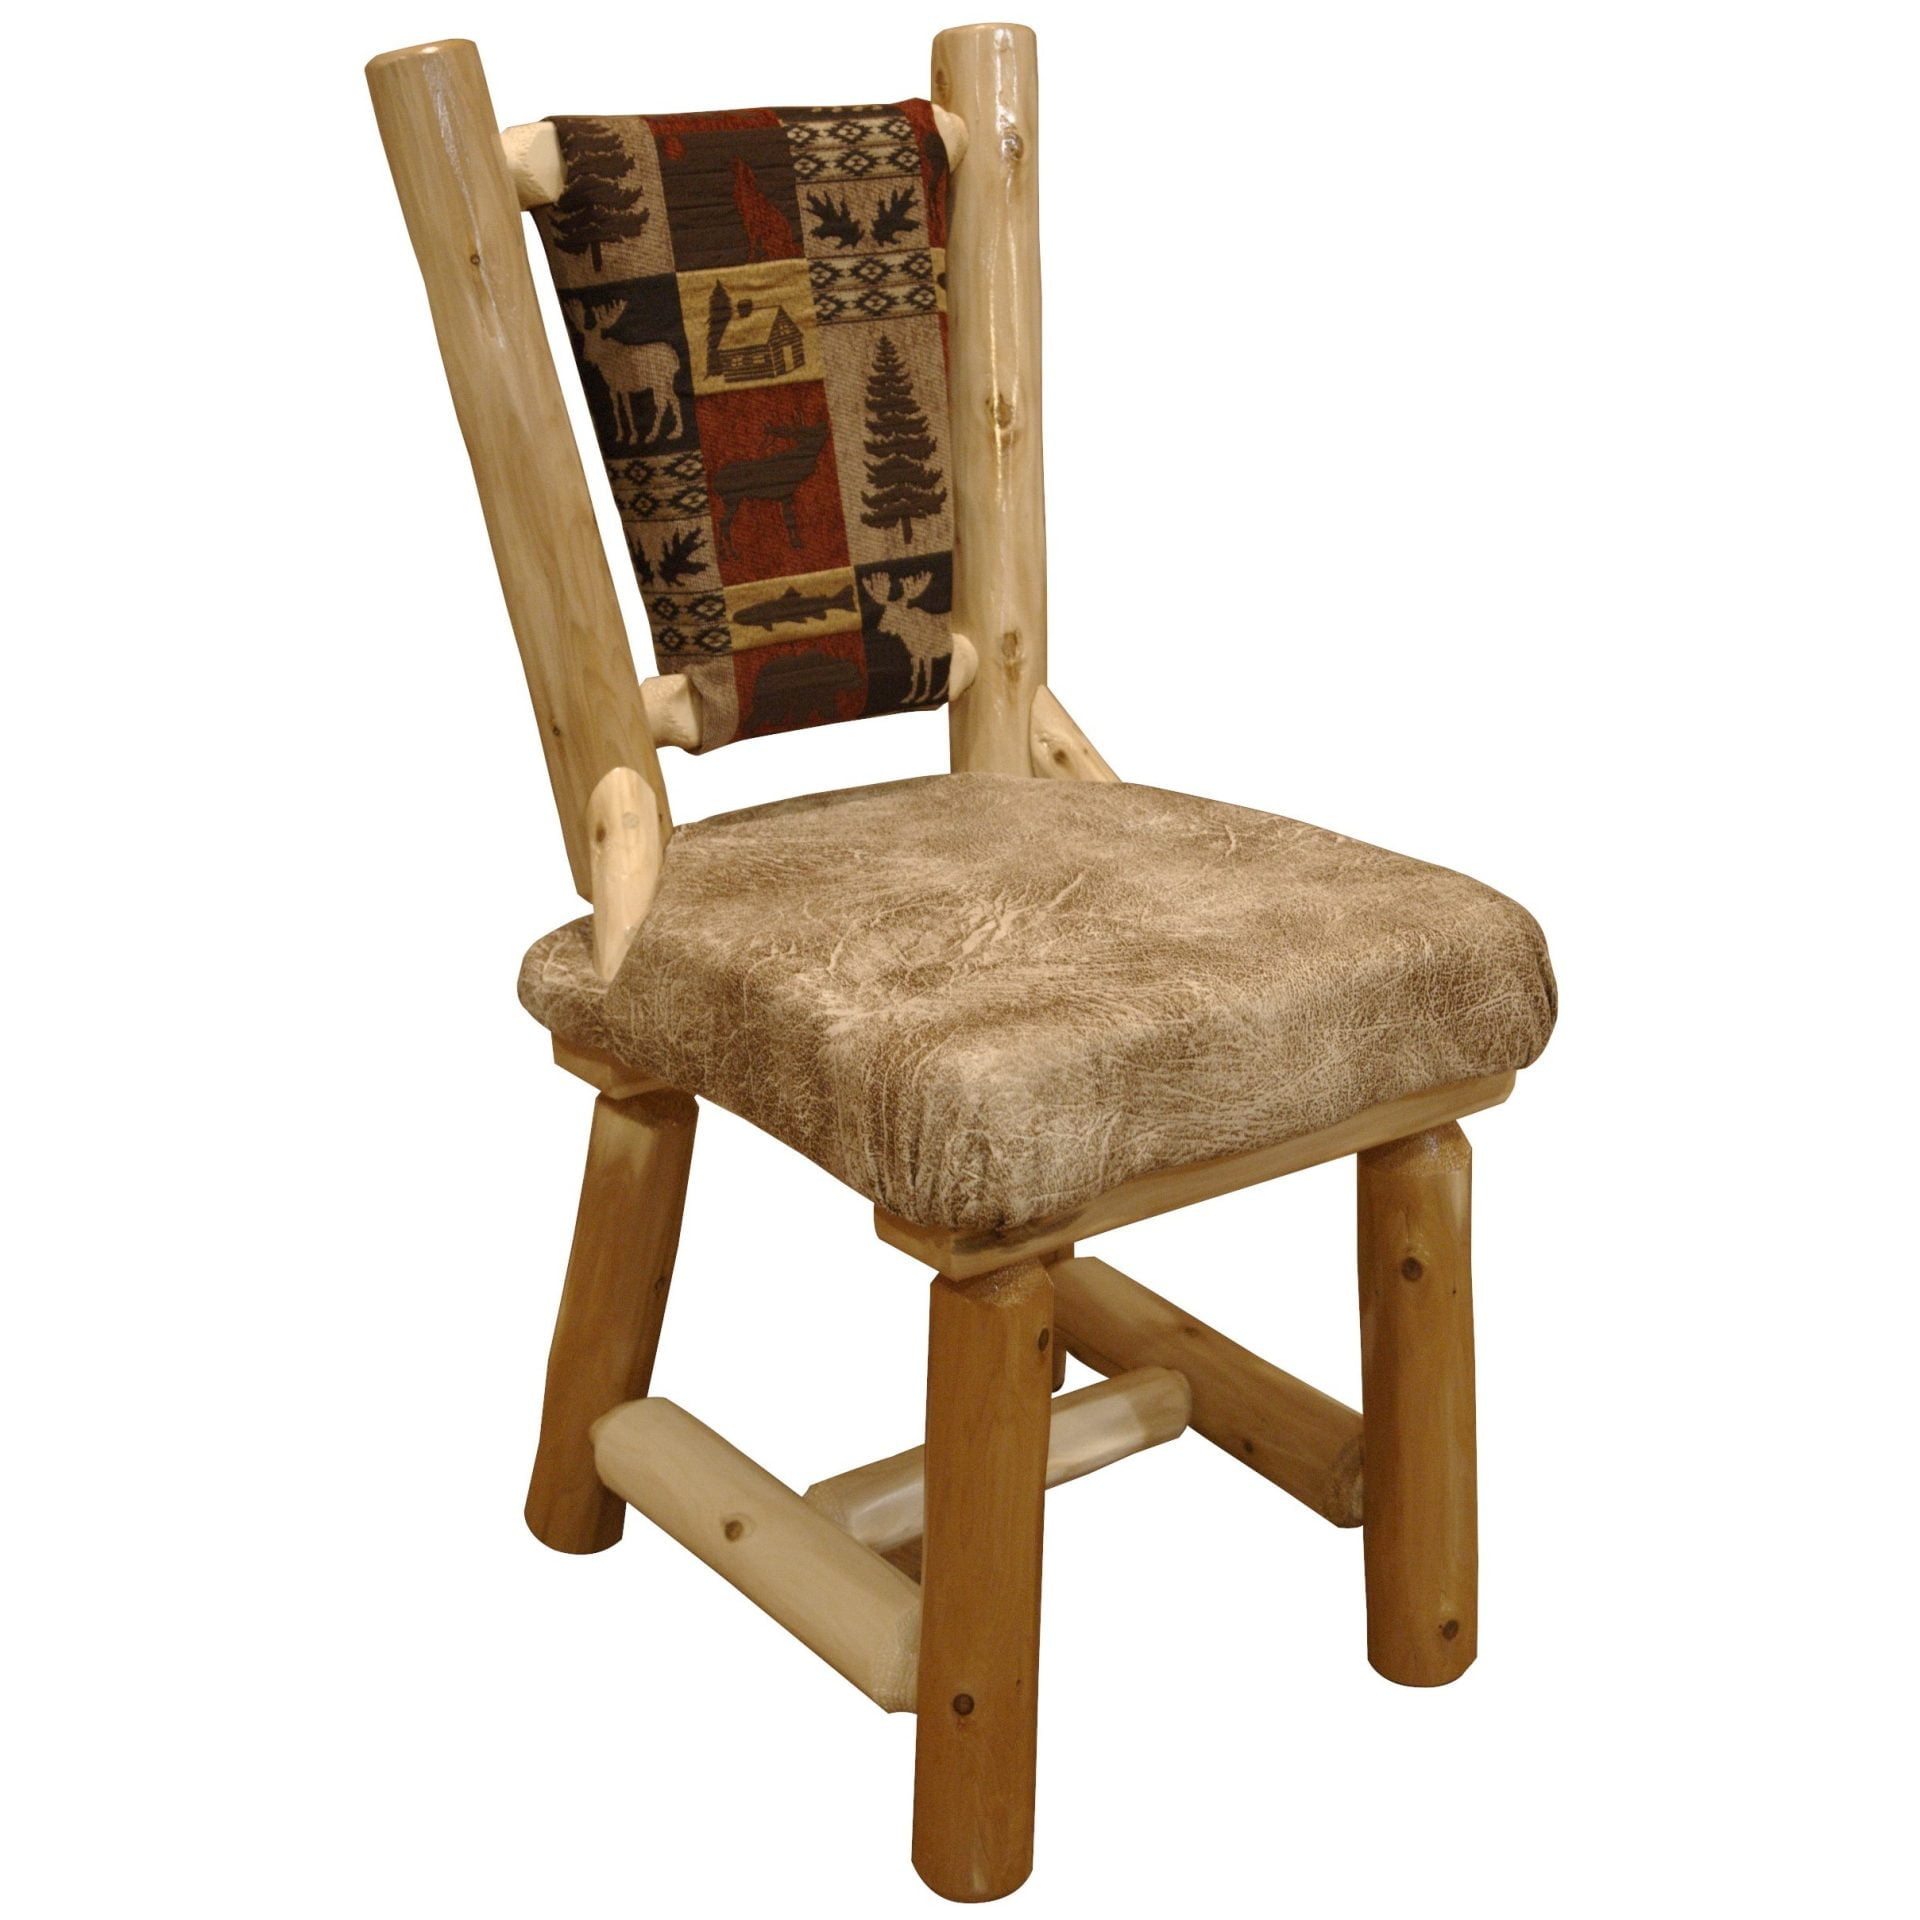 Rustic White Cedar Log Upholstered Dining Chair